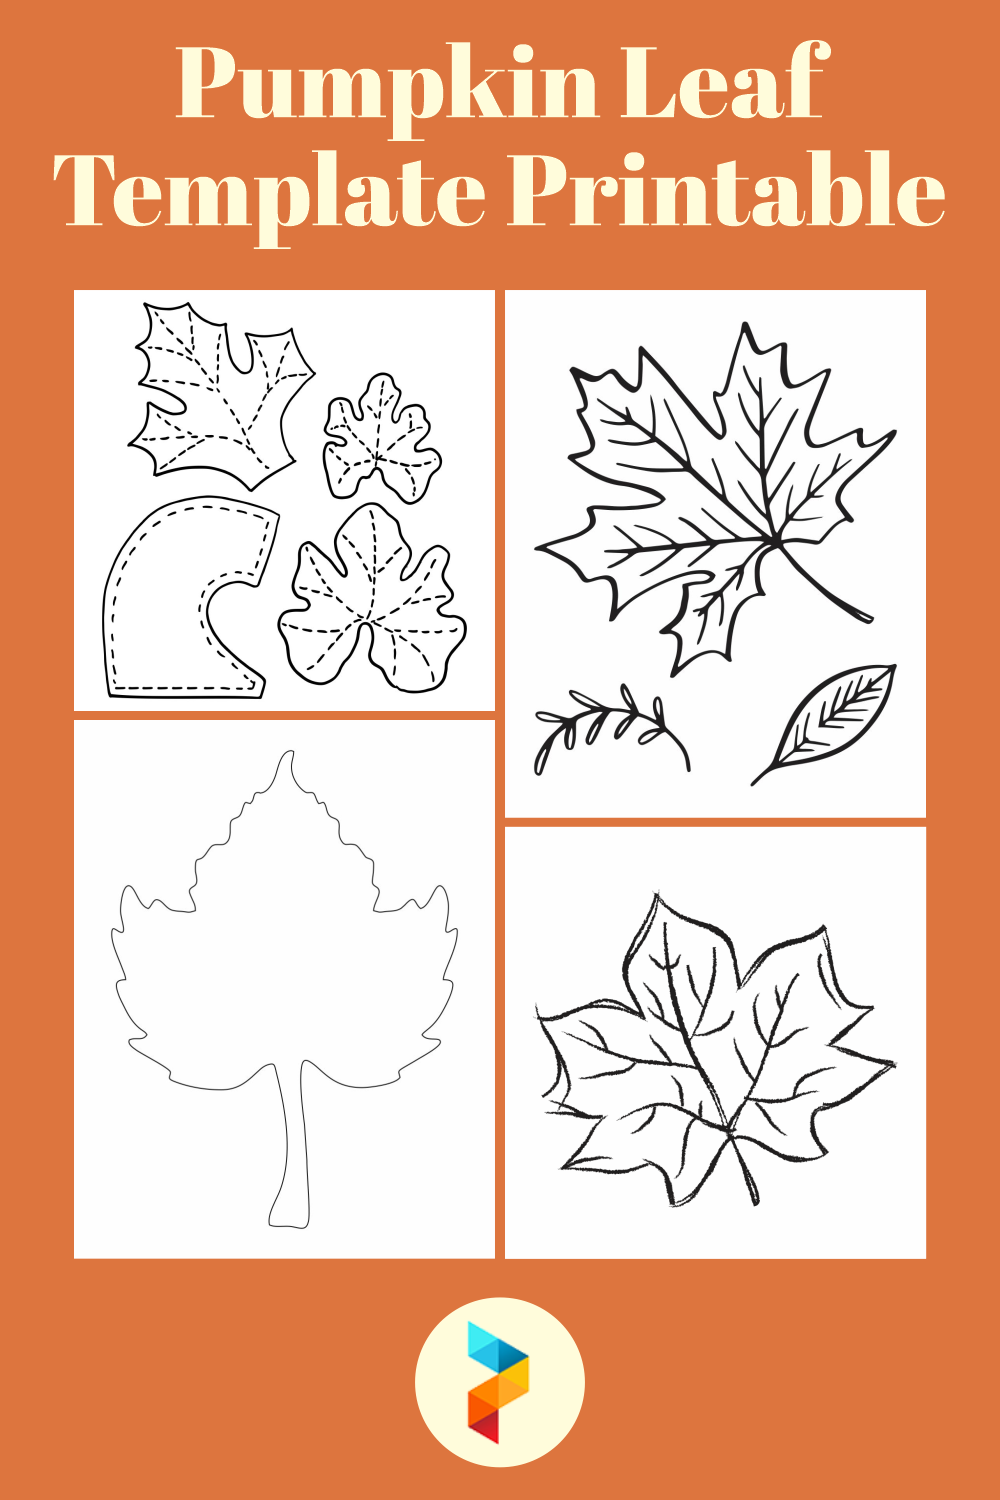 Pumpkin Leaf Template Printable